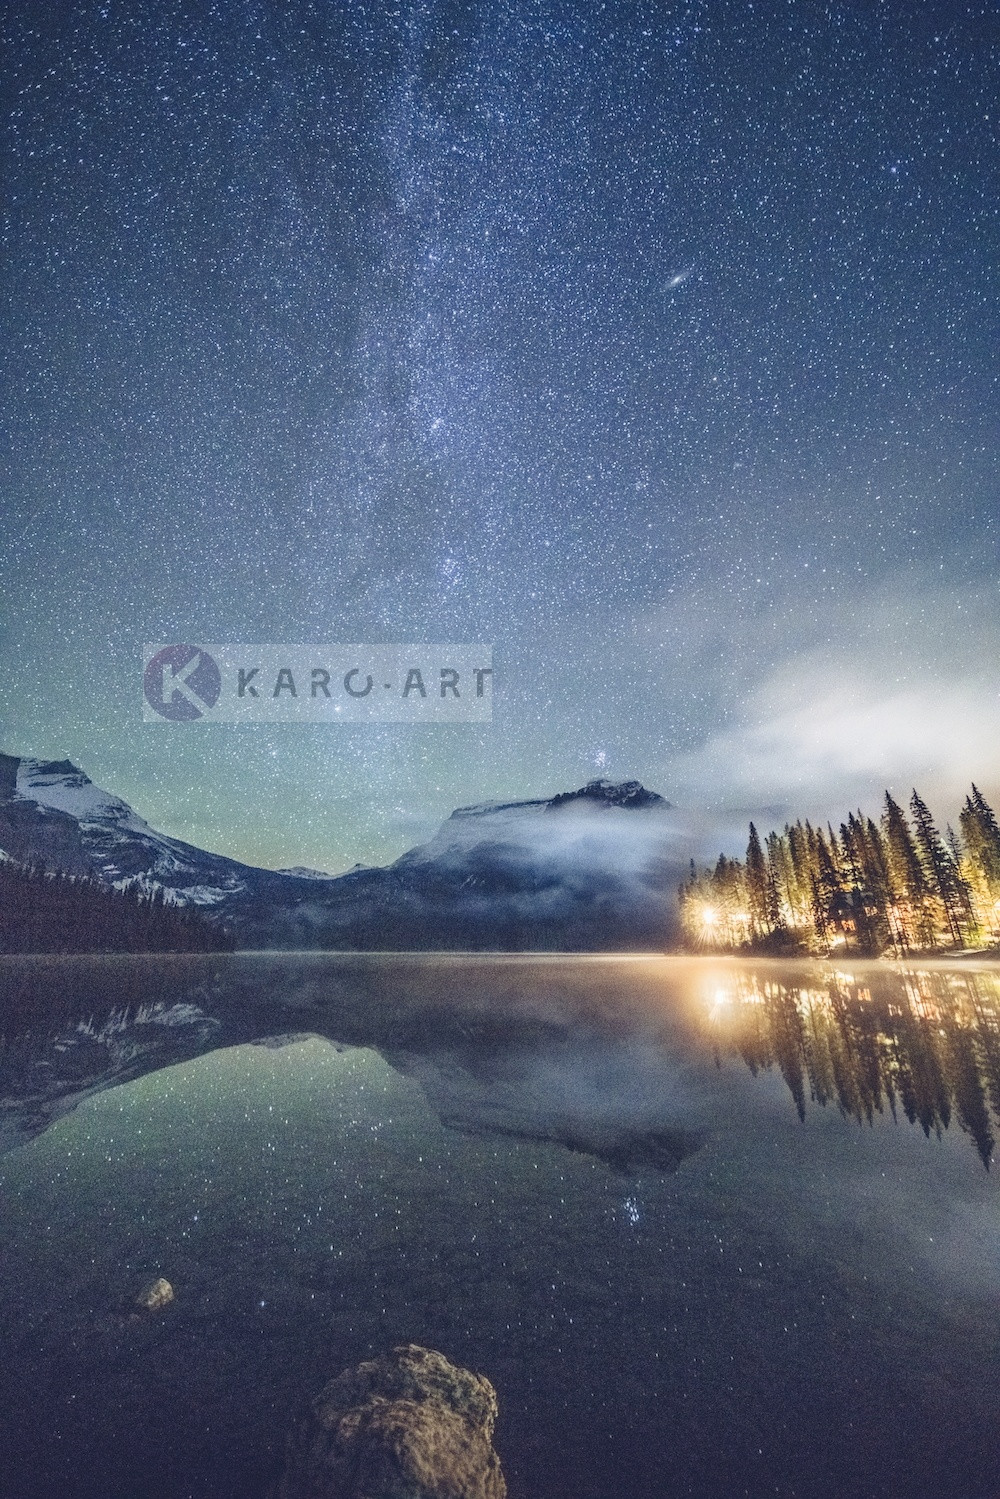 Afbeelding op acrylglas - Emerald Lake, Melkweg